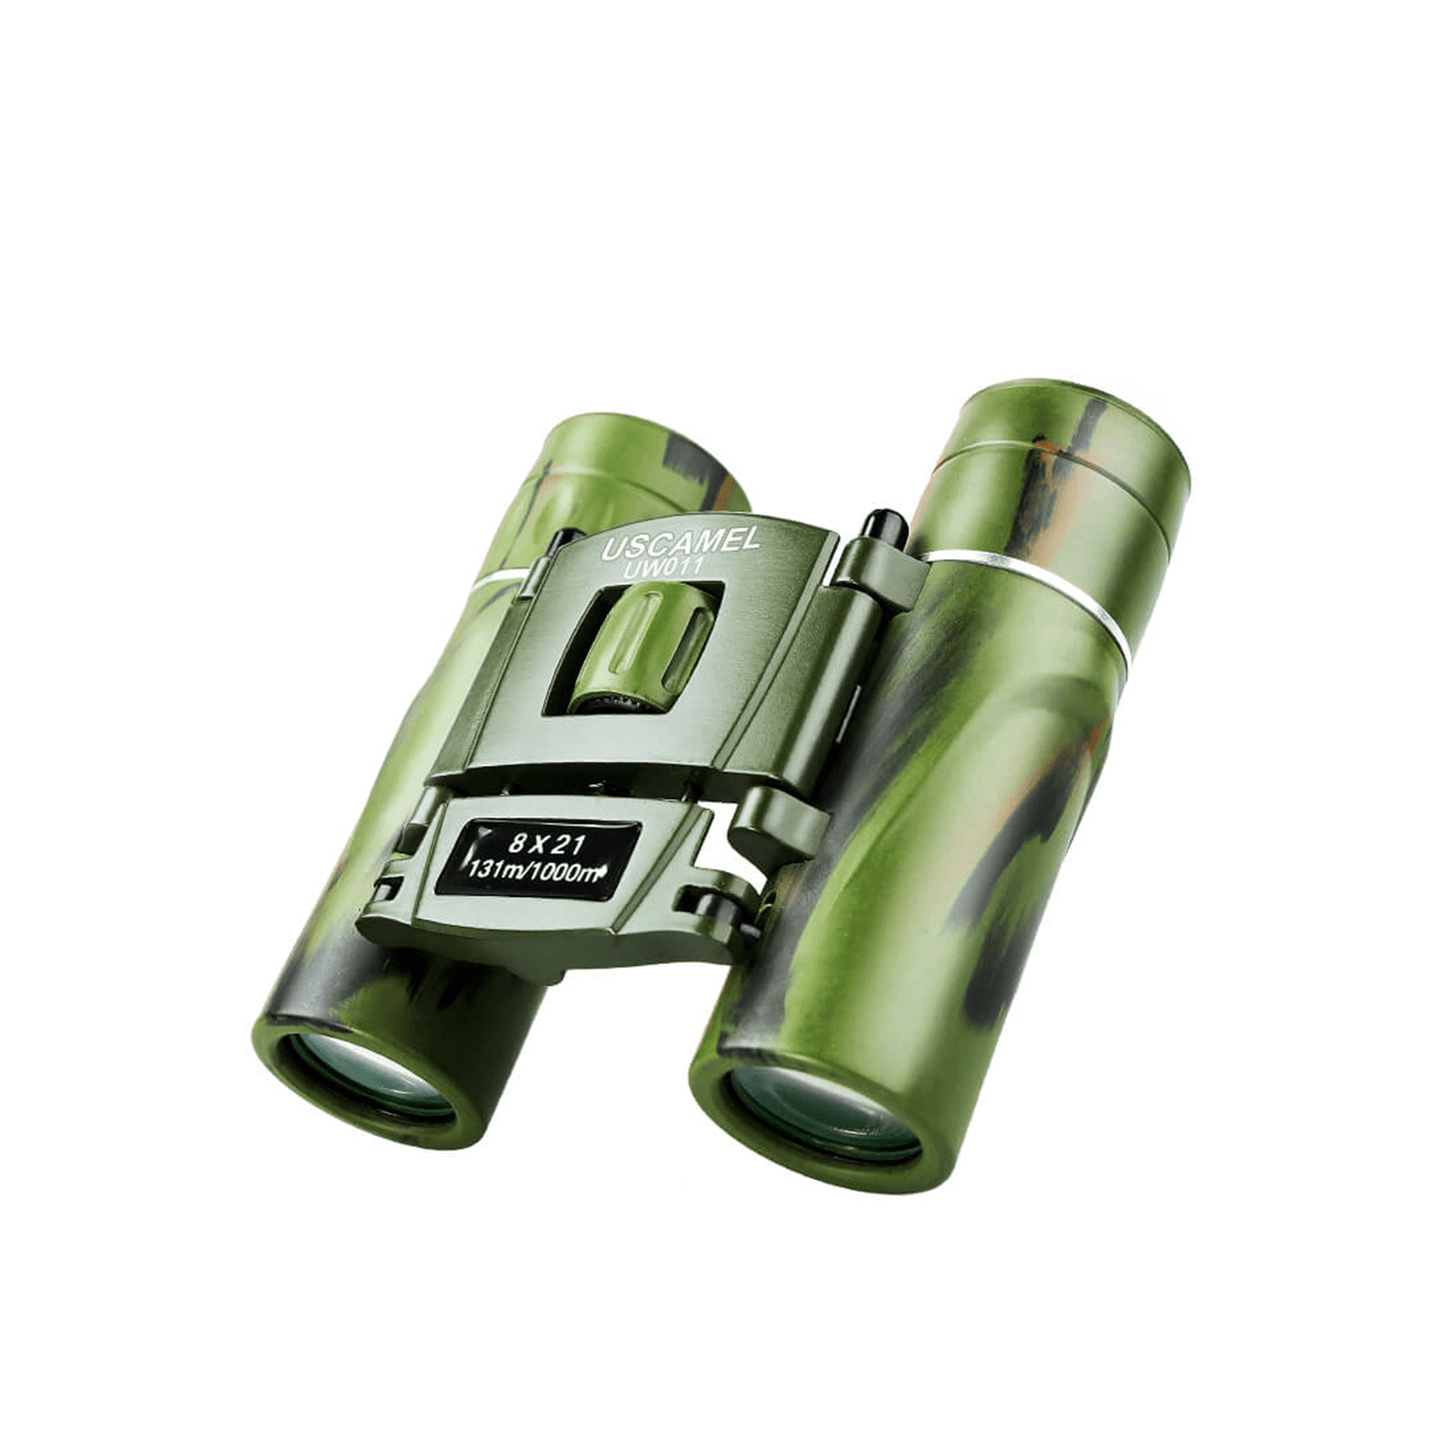 8x21 Small Binoculars